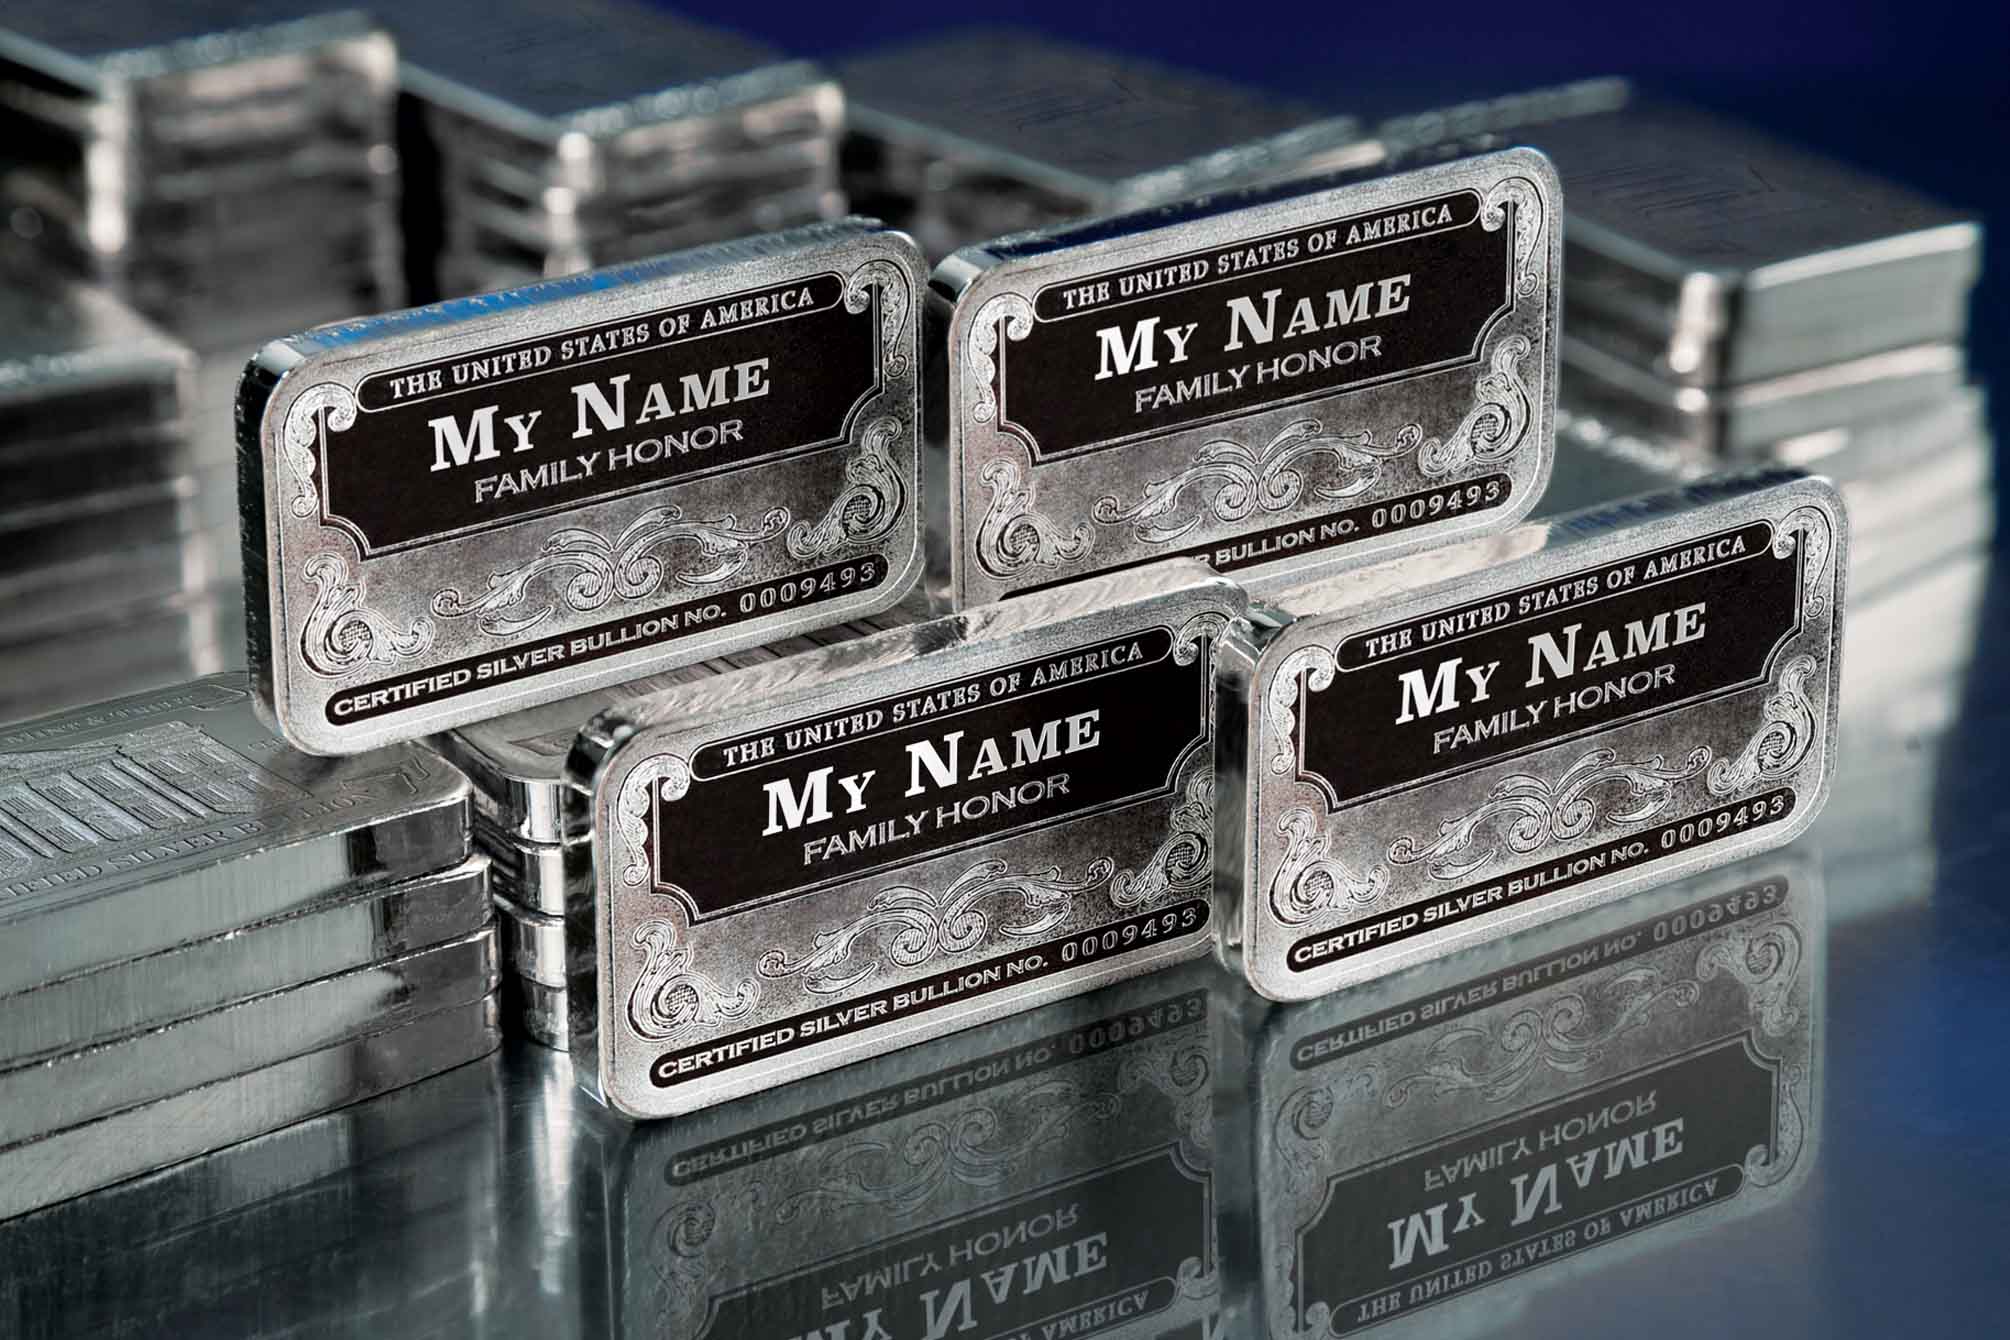 5oz Mega 'Personalized Name' Family Honor Silver Bars, Certified Silver Bullion